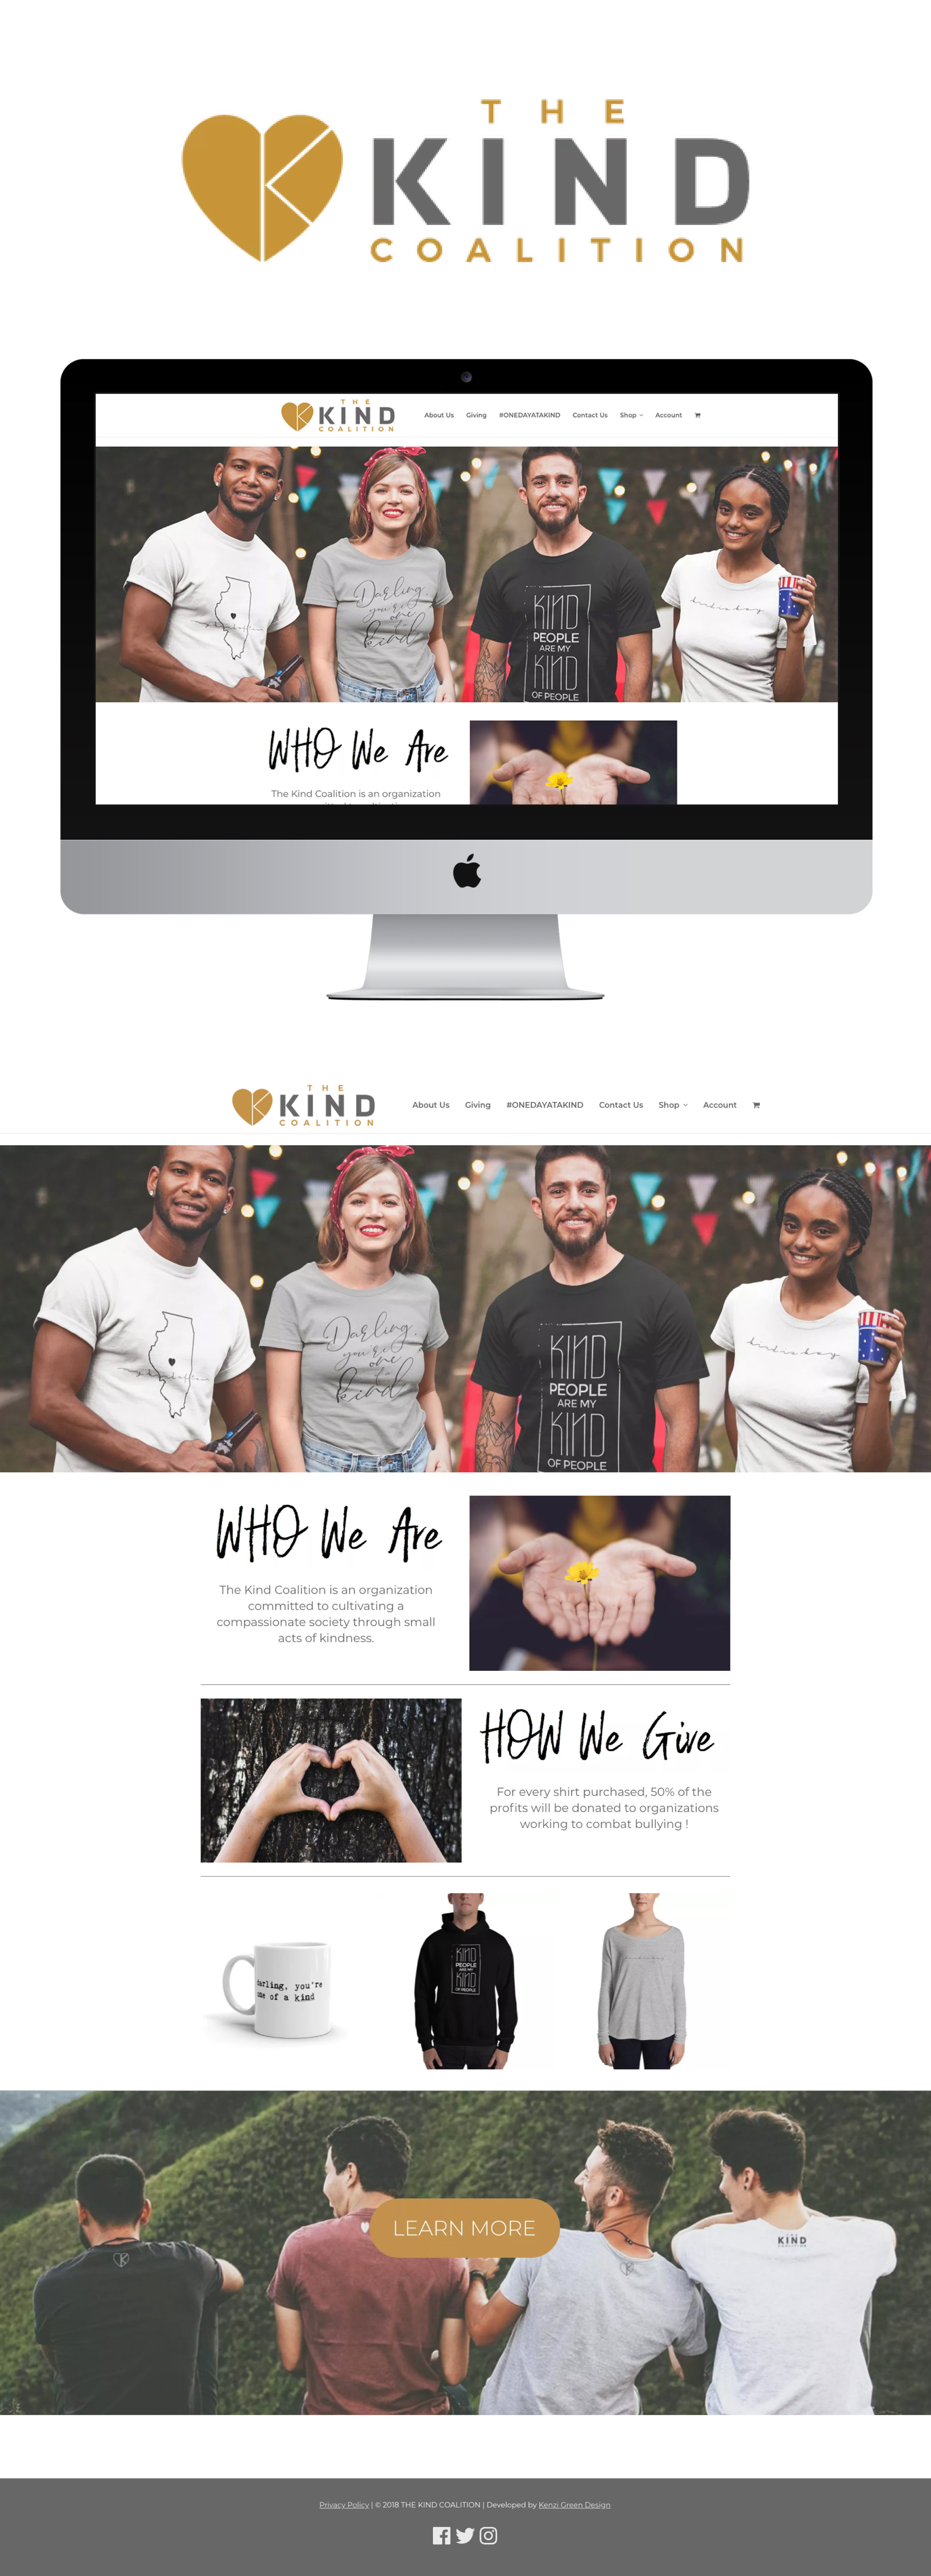 The Kind Coalition Website Design #webdesign #websitetheme #wordpresstheme